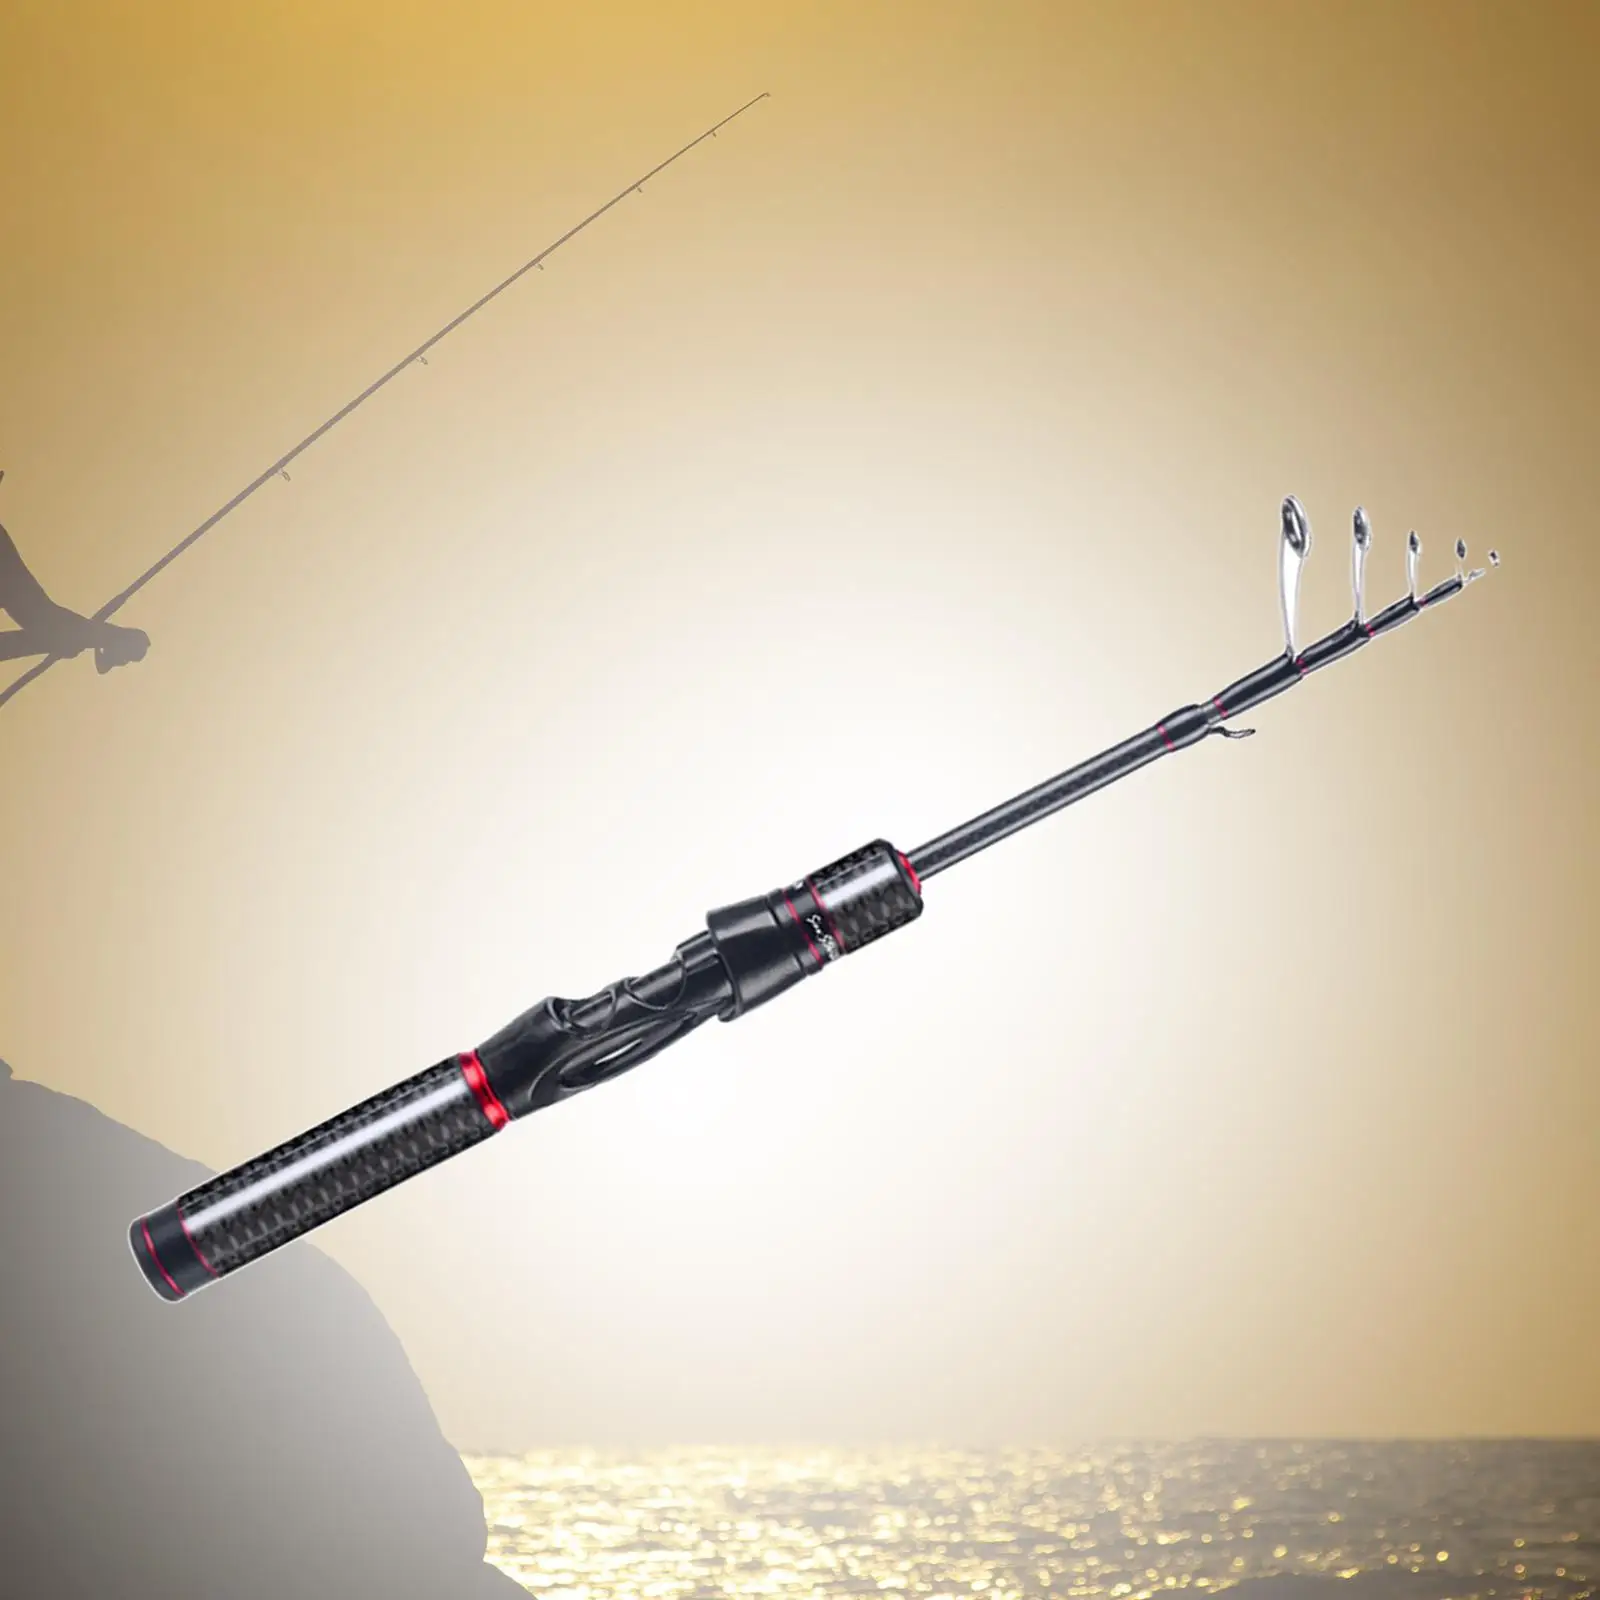 Carbon Fiber Fishing Rod Telescopic Fishing Pole Durable Retractable Handle Fishing Tool for Walleye Travel Salmon